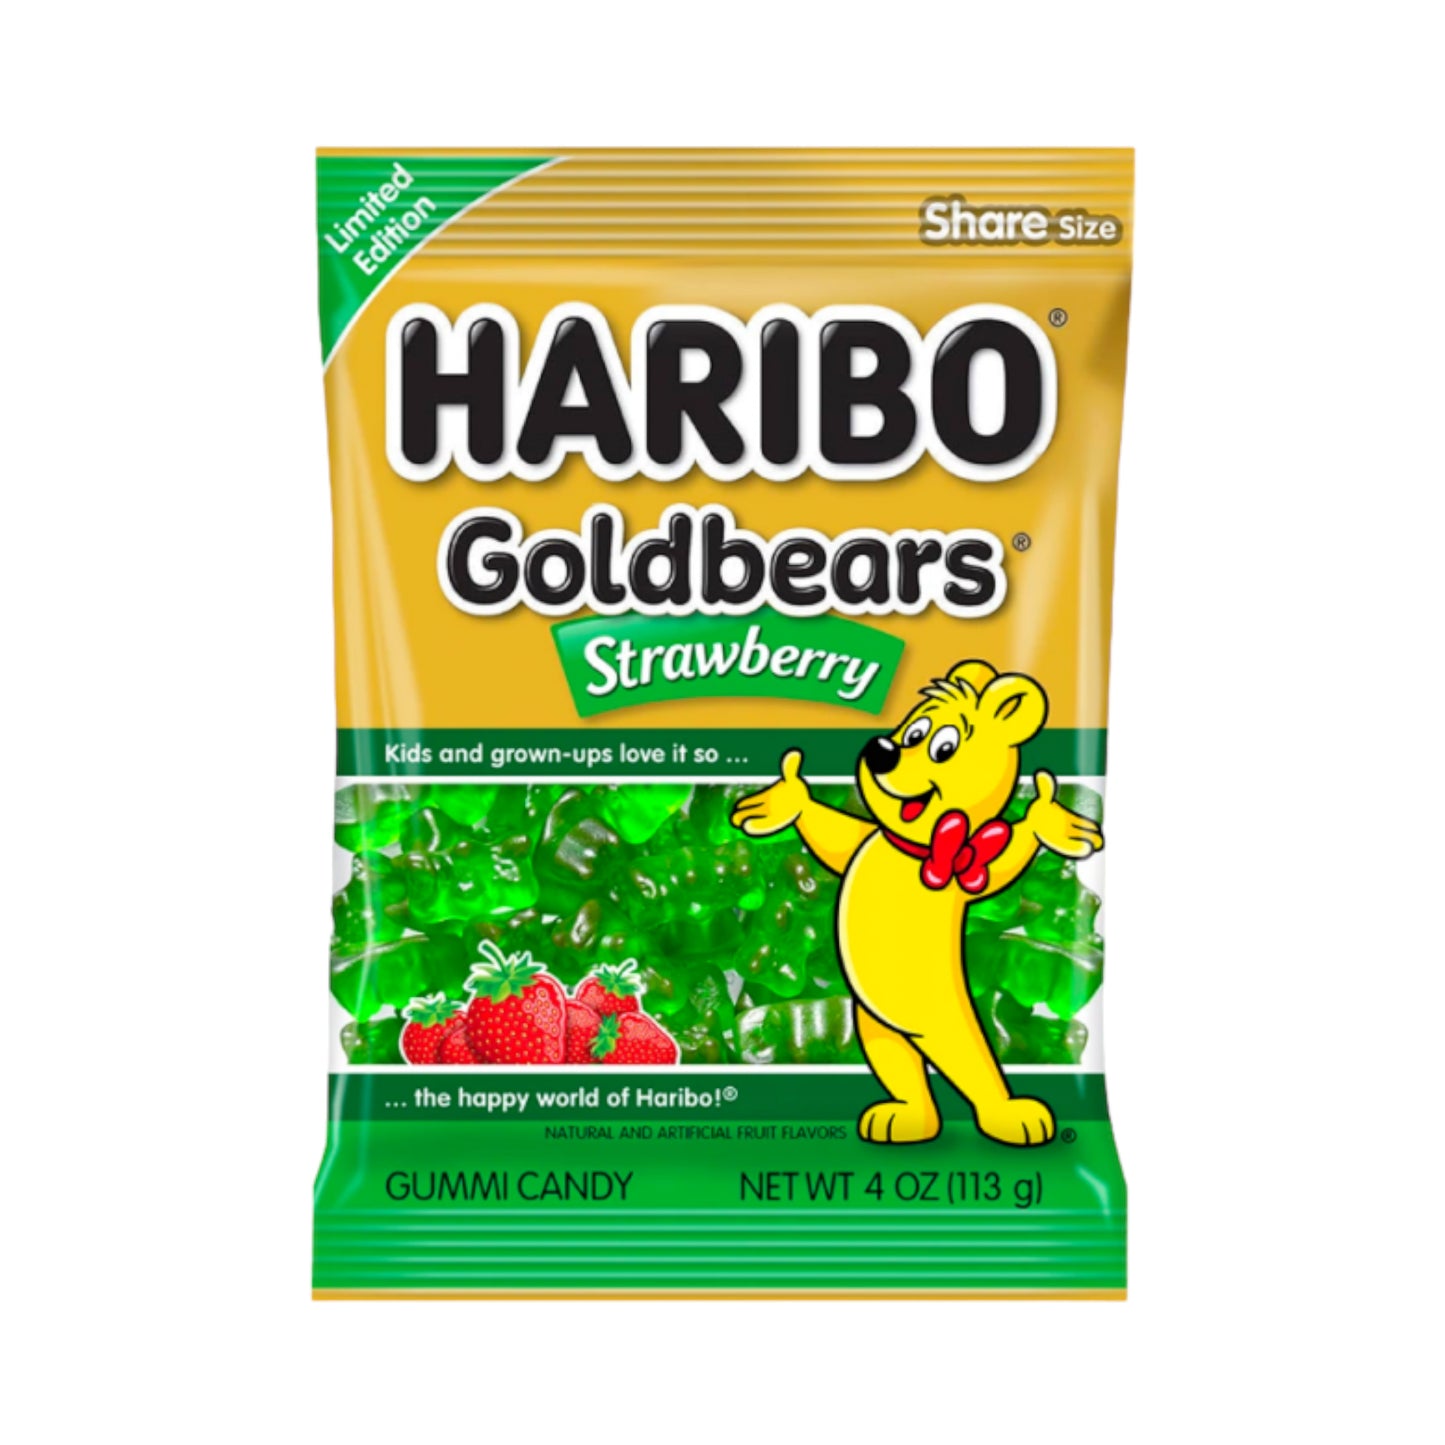 Haribo Gold Bears Strawberry - 4oz (113g)